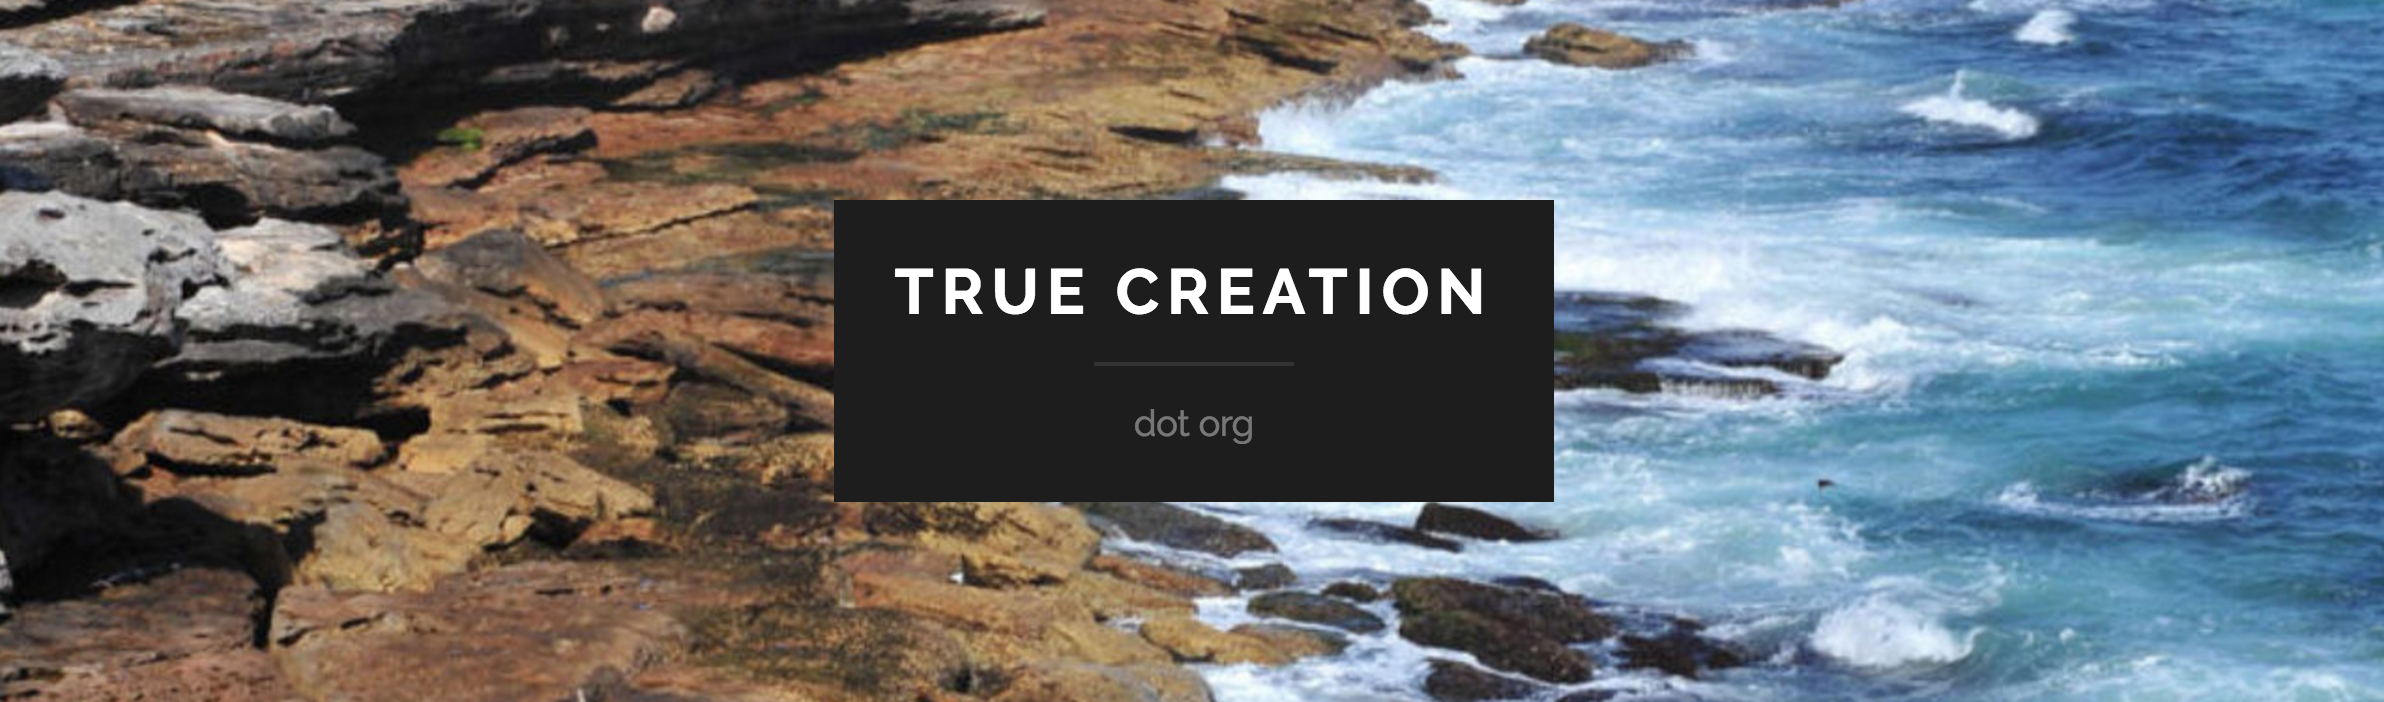 True Creation dot org